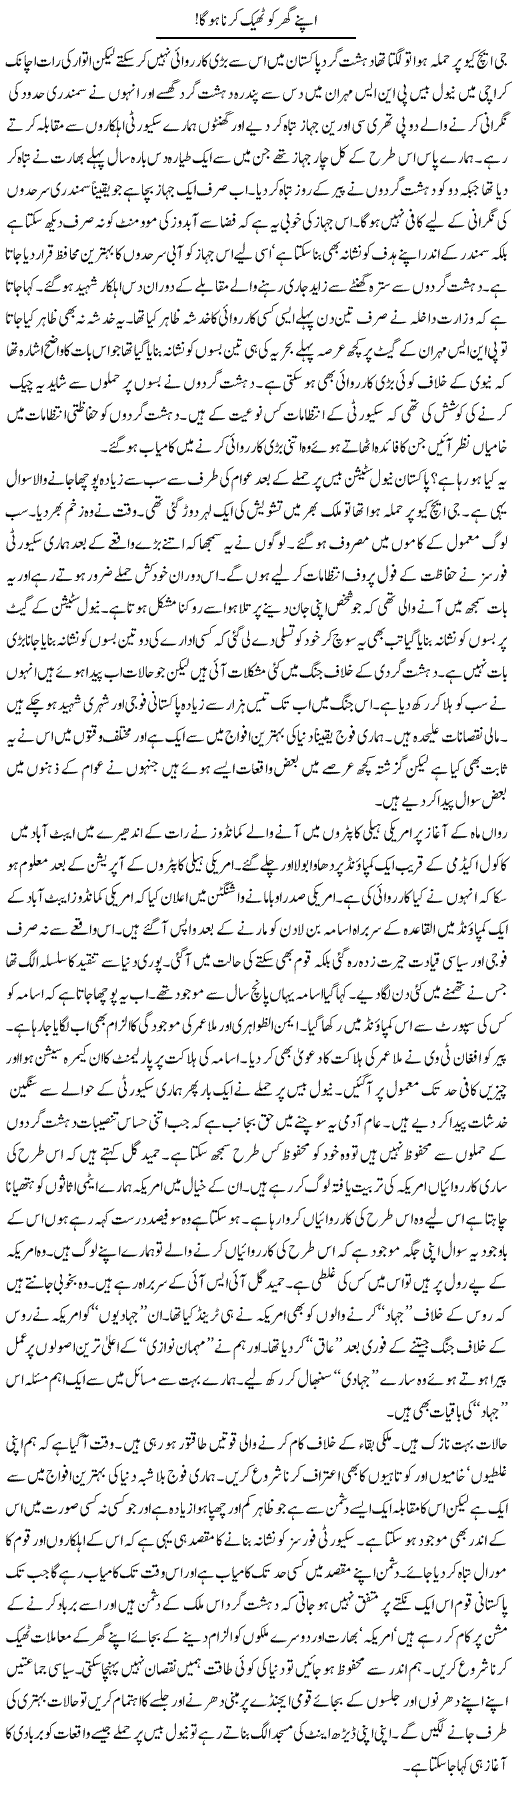 Terror in Pakistan Express Column Iyaz khan 24 May 2011